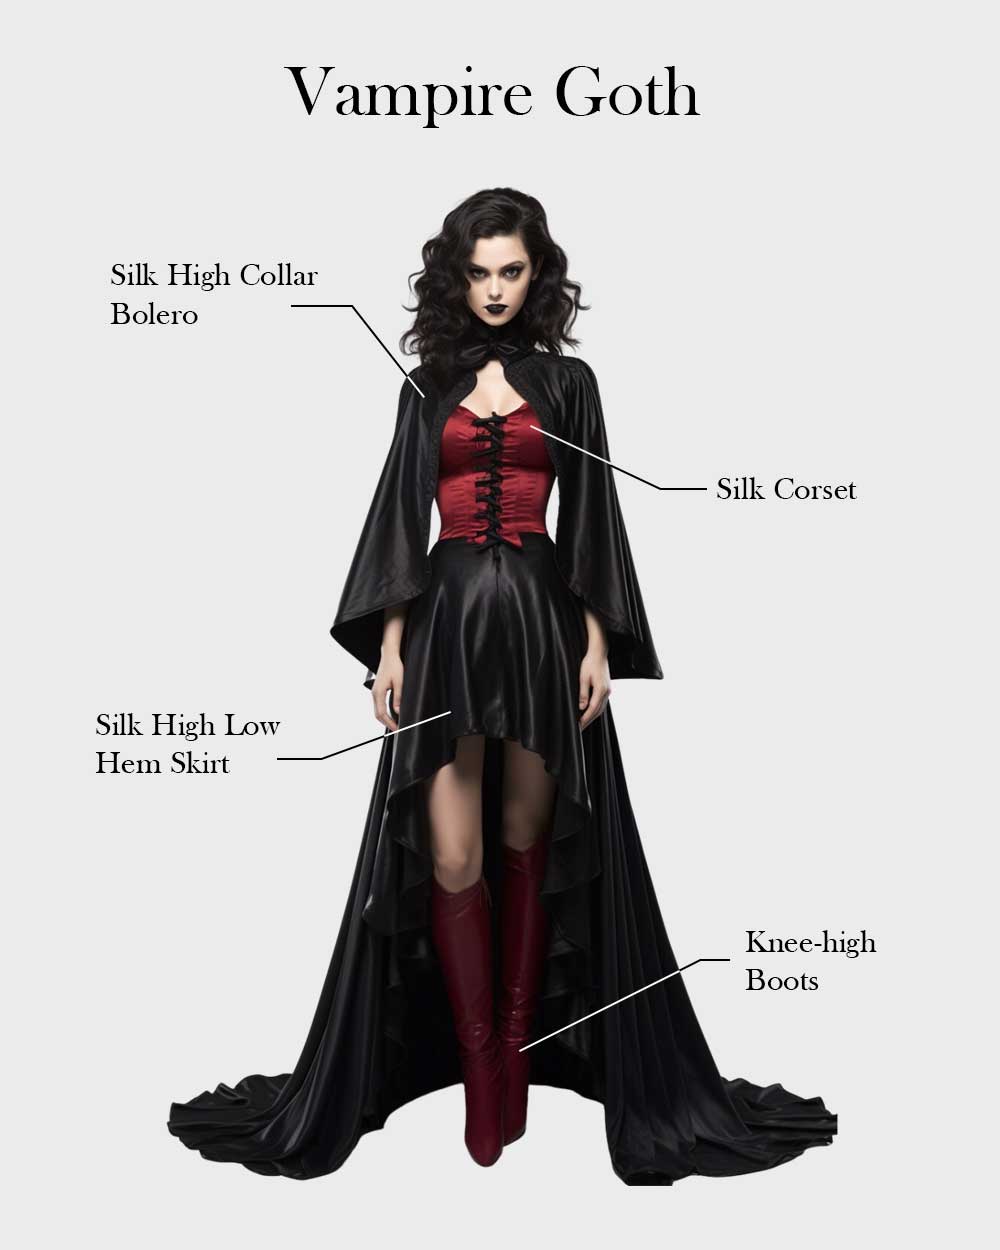 Female Vampire Goth fashion style